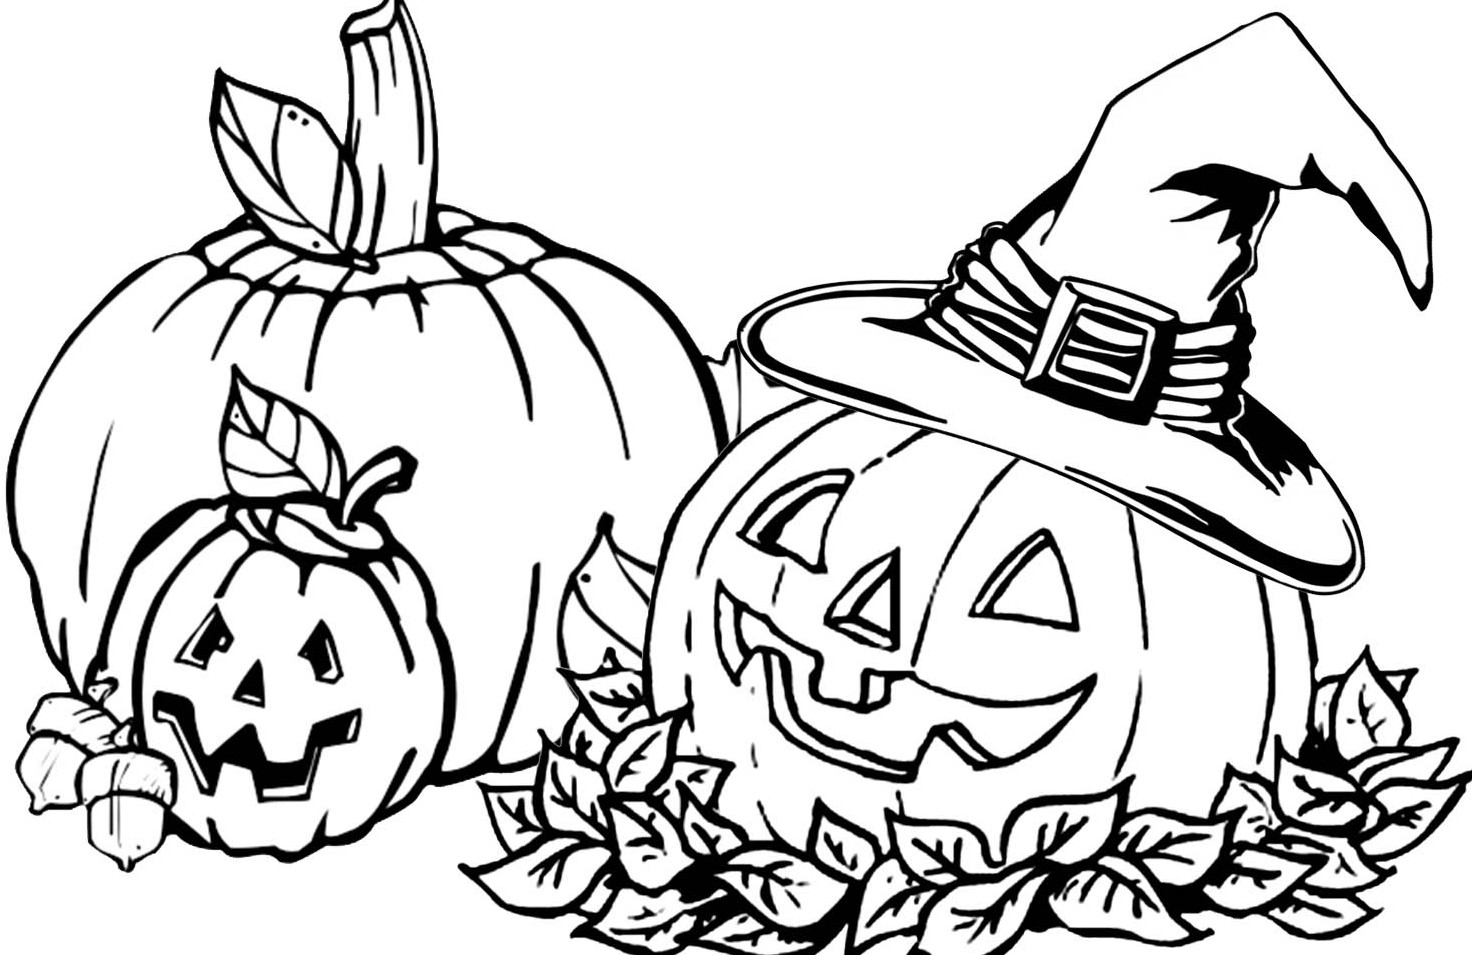 Pumpkin coloring, Download Pumpkin coloring for free 2019